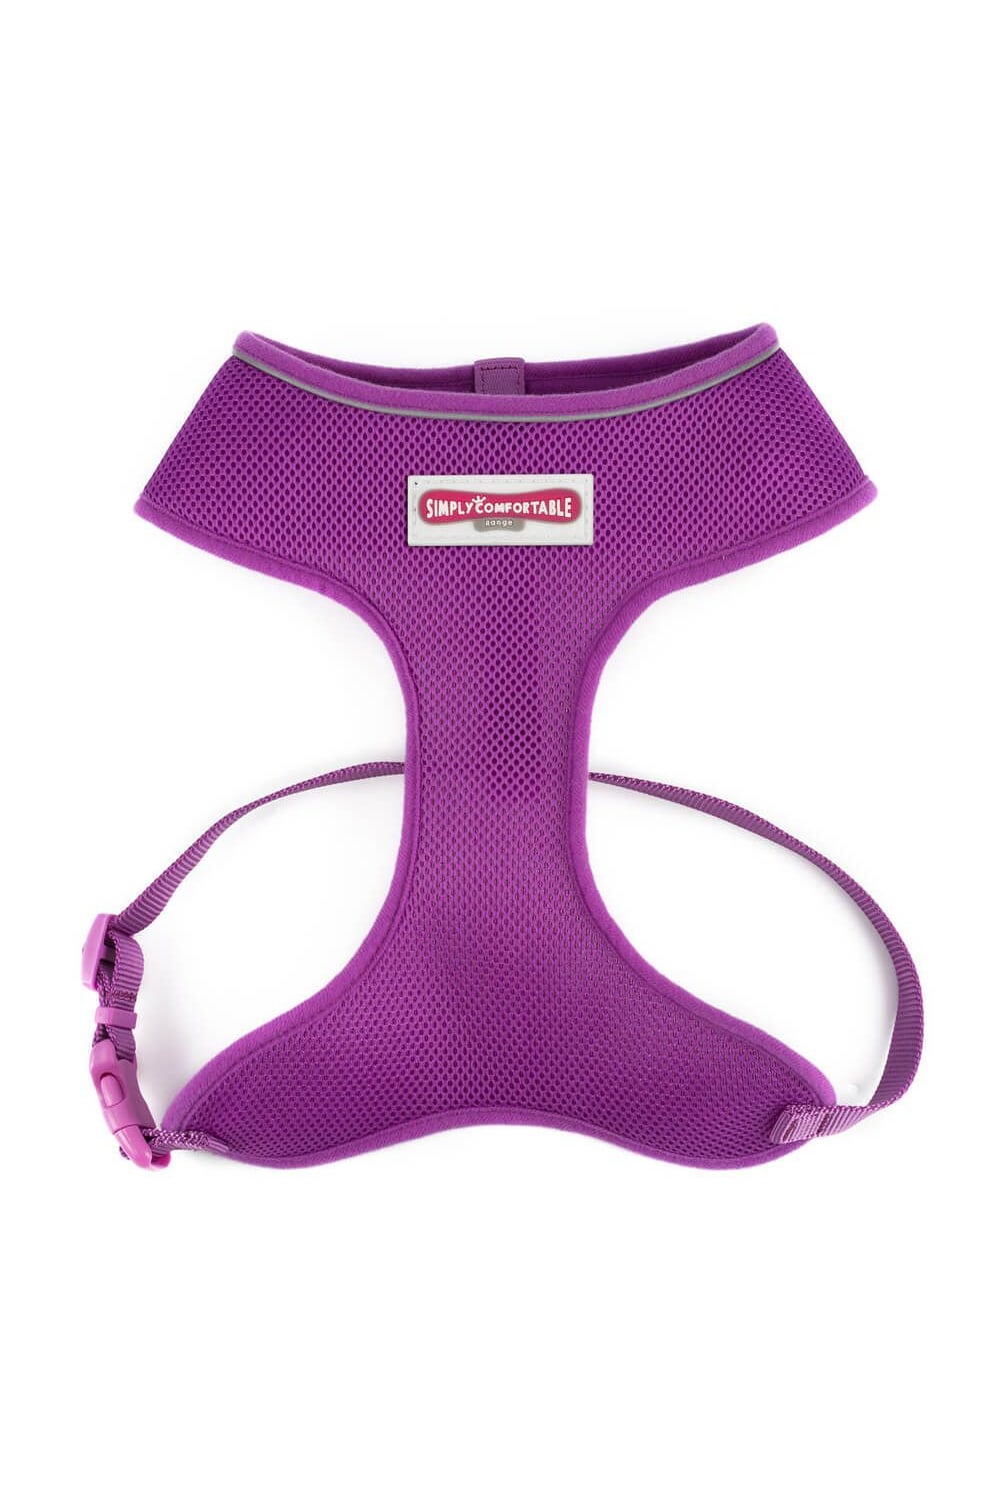 Ancol Comfort Mesh Harness (Purple) (S)